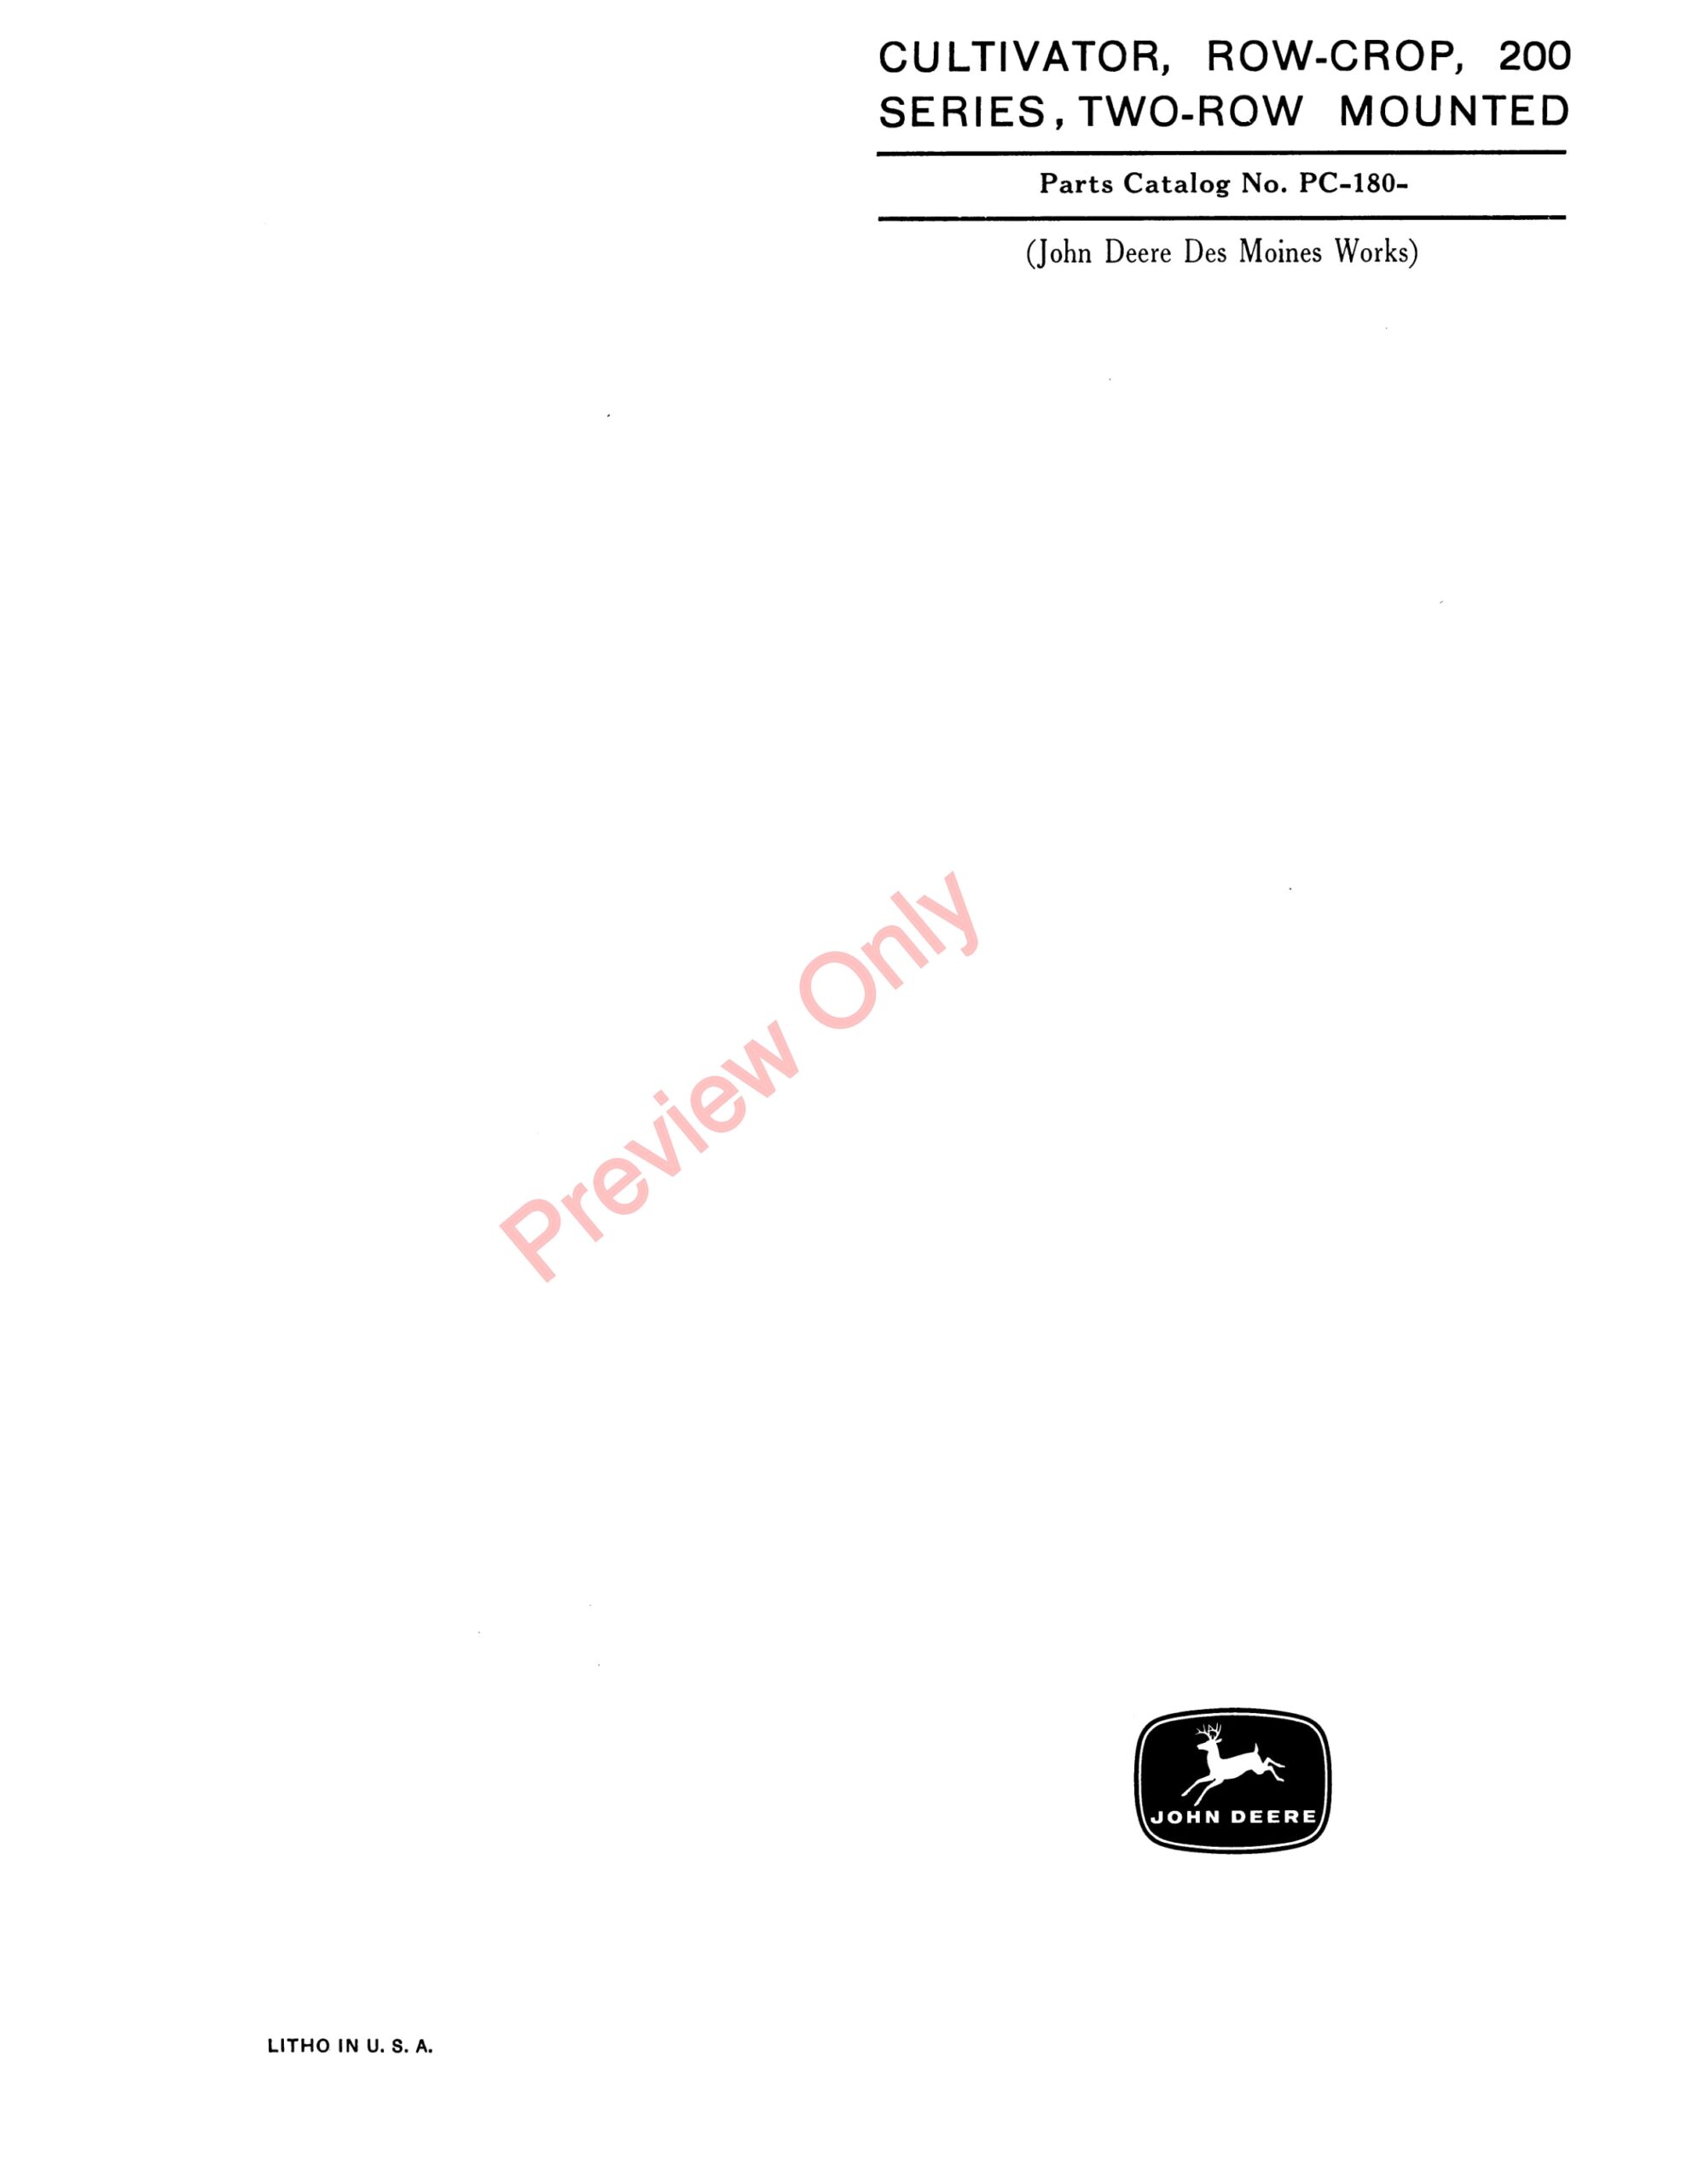 John Deere 200 Series Row-Crop Cultivators – Two-Row Mounted Parts Catalog PC180 01NOV57-1